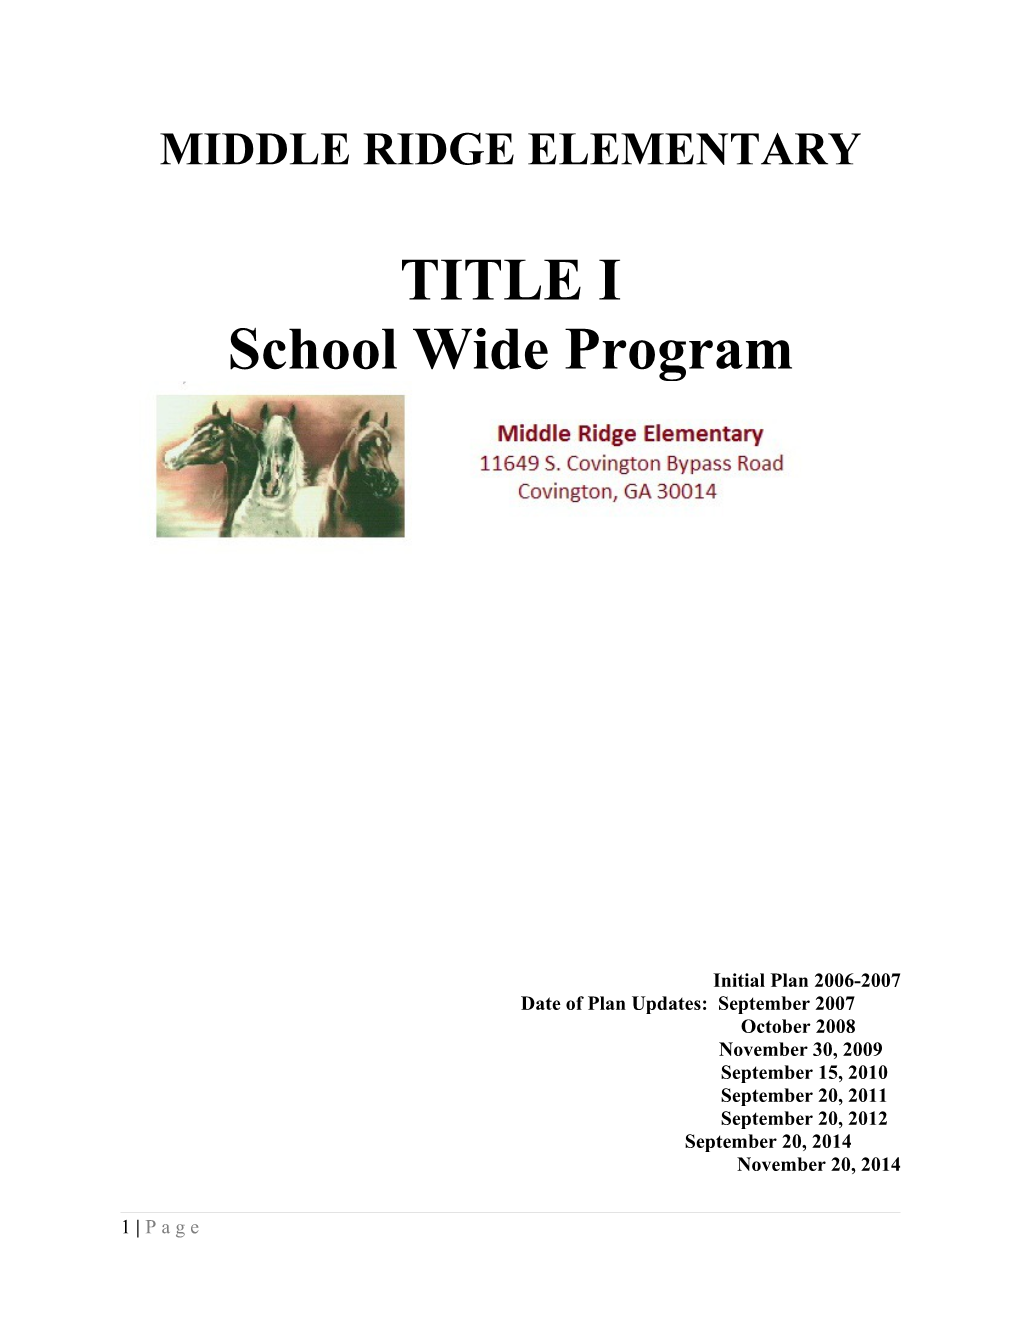 Middle Ridge Elementary